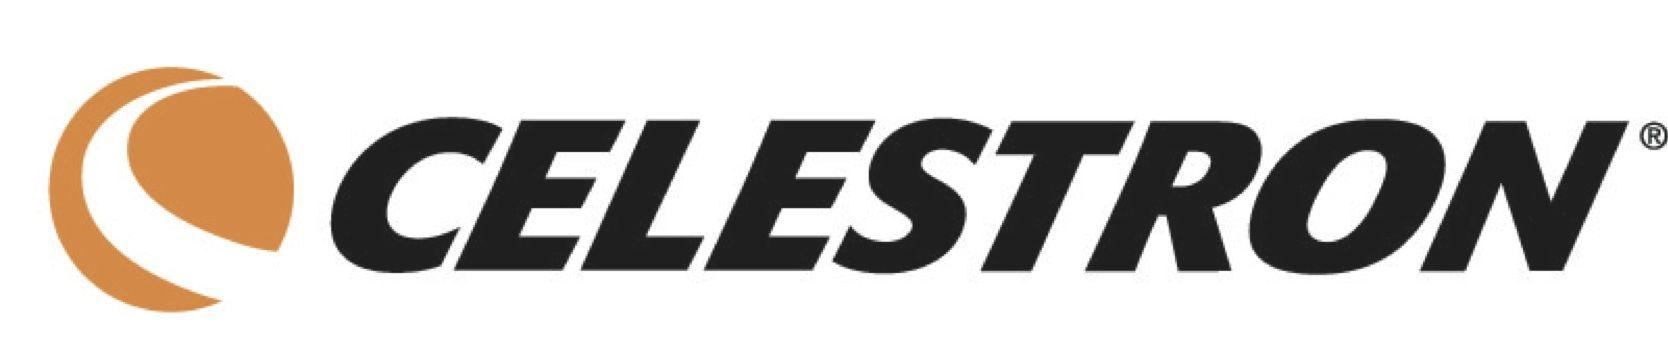 Celestron Logo - Celestron LLC - Manufacturing Day Event | Calendar Month View | City ...